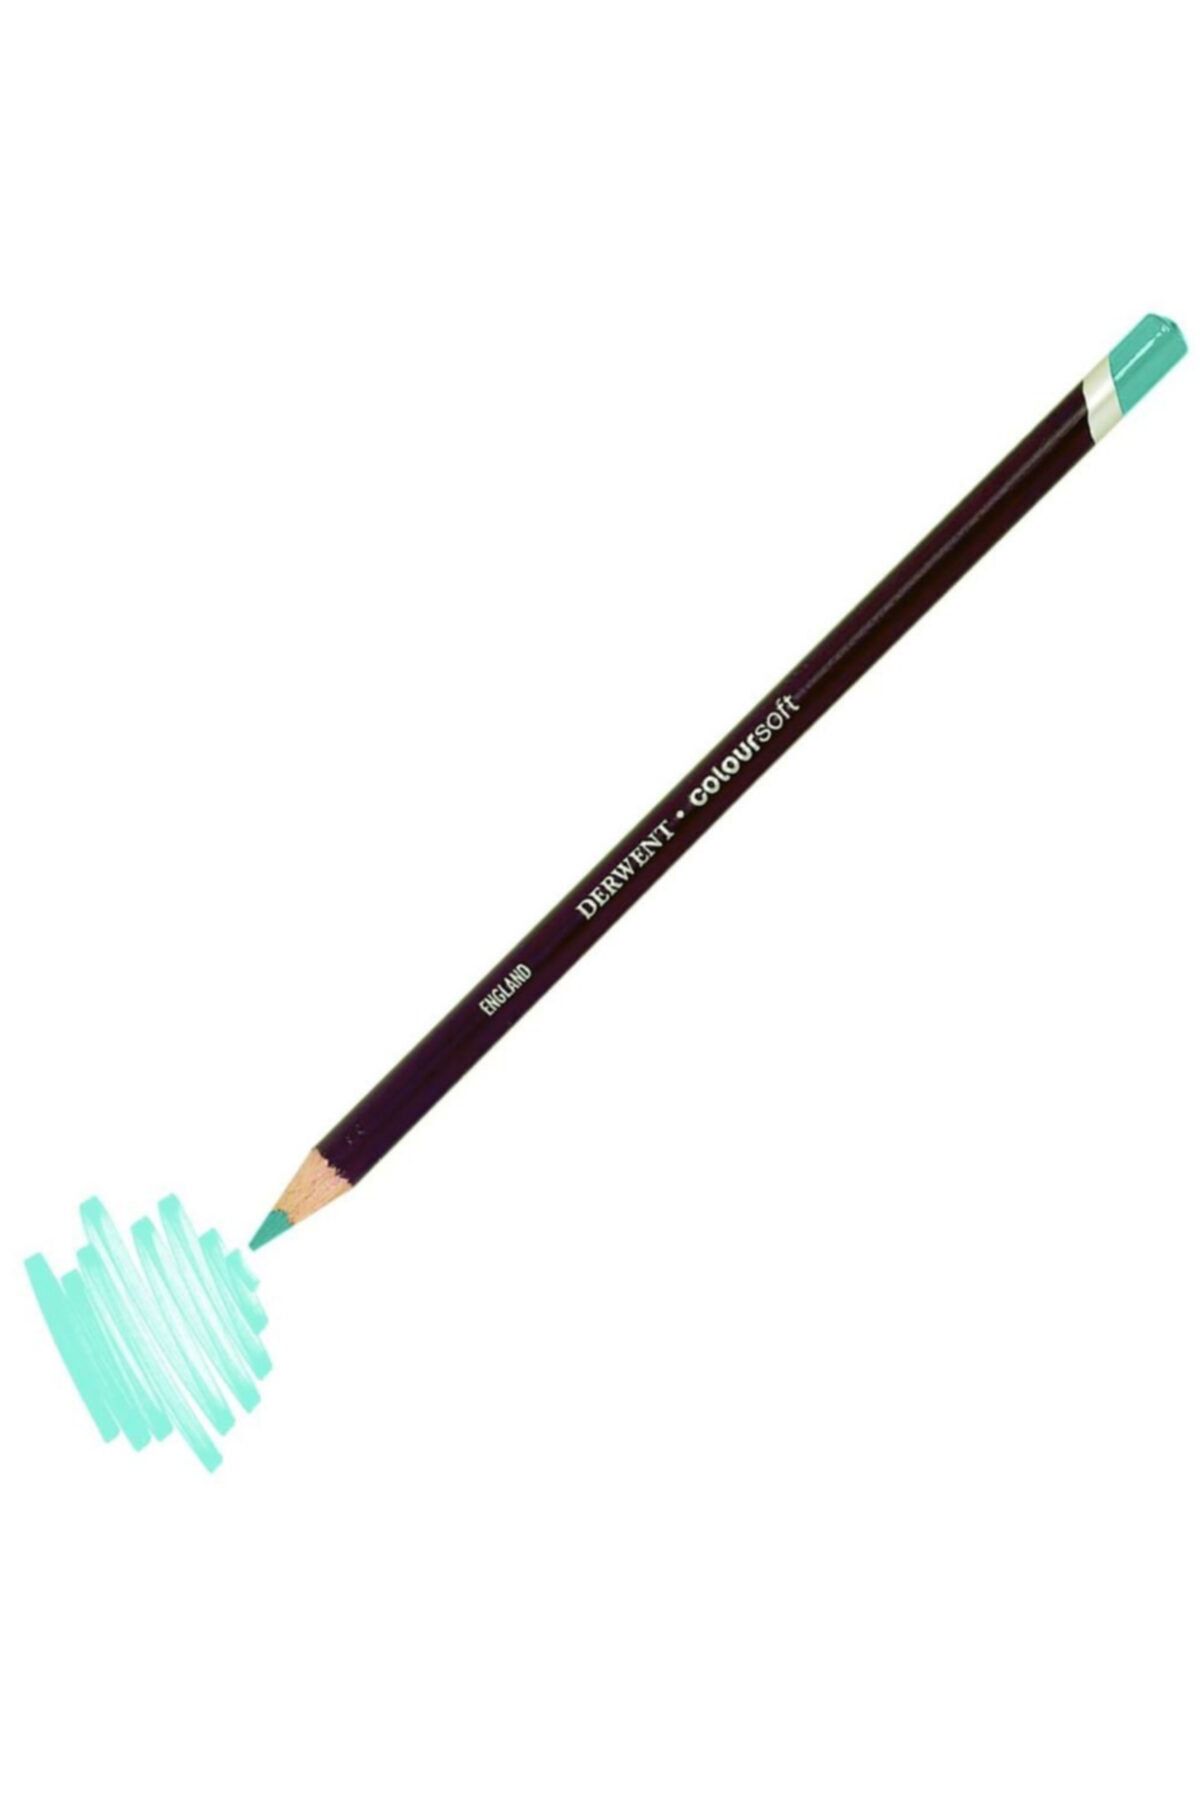 Derwent Coloursoft Pencil Yumuşak Kuru Boya Kalemi C350 Iced Blue